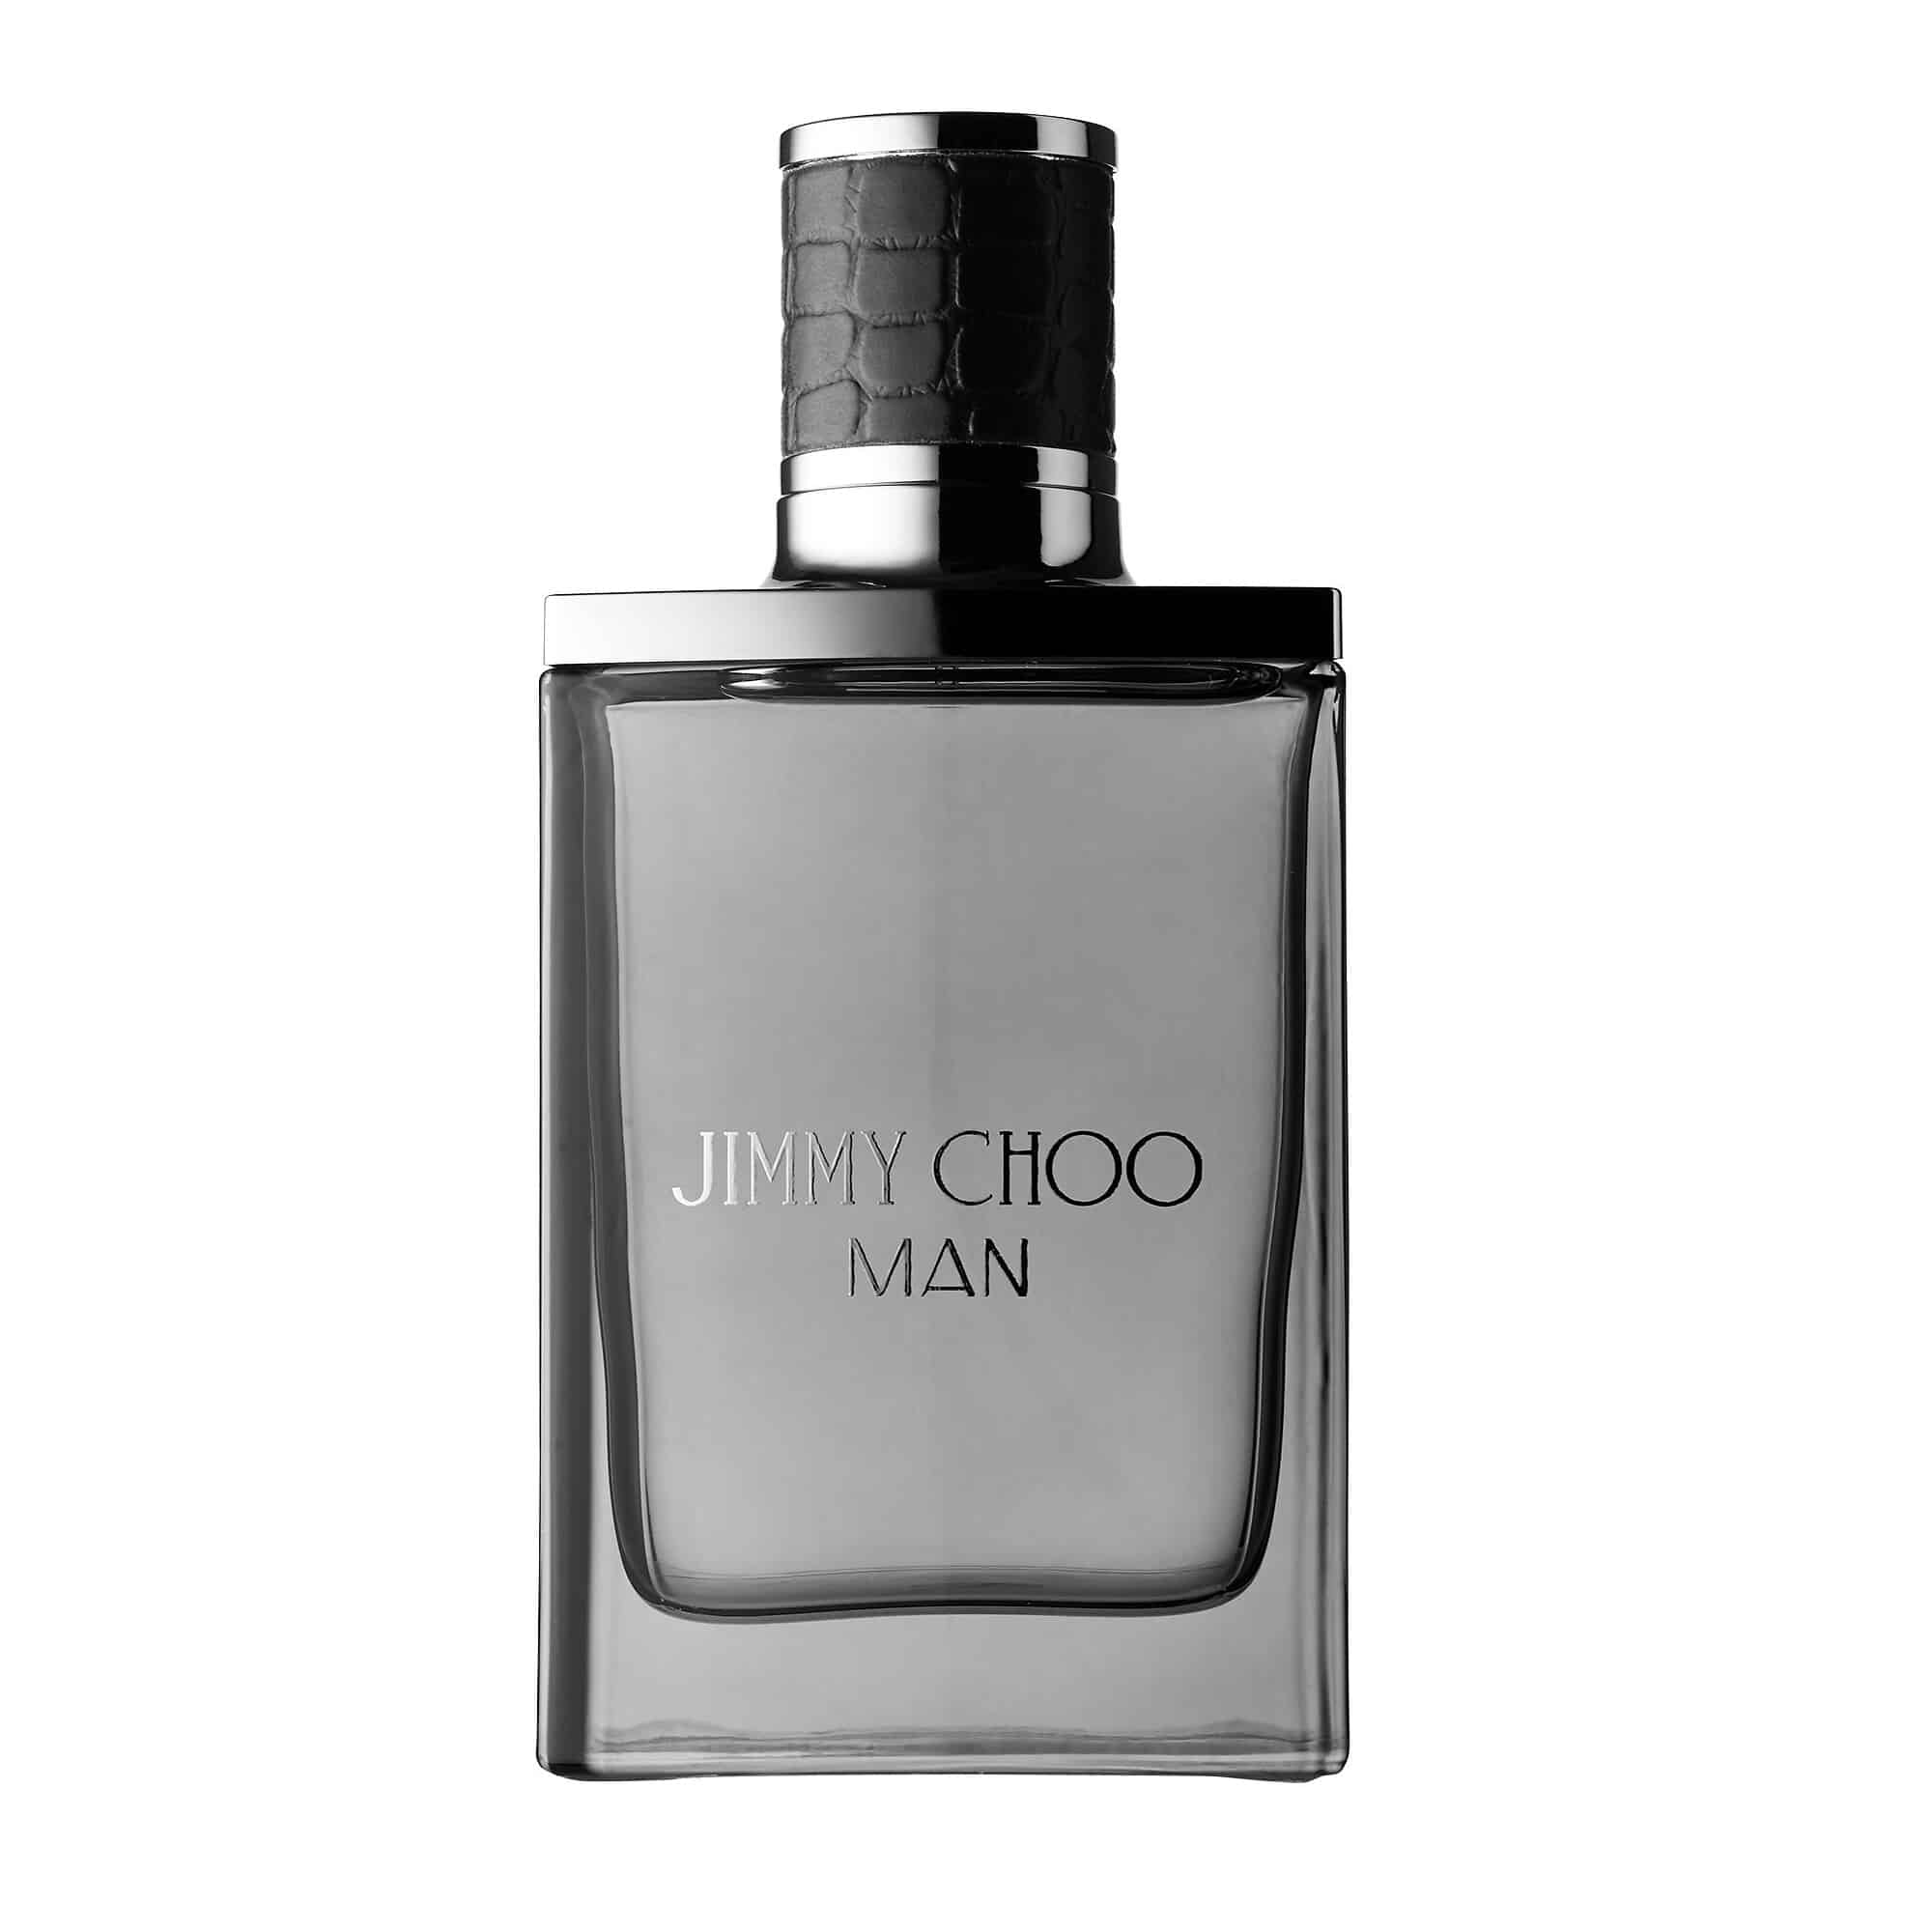 Jimmy Choo Man » ScentClub Australia » Fragrance Subscription Box